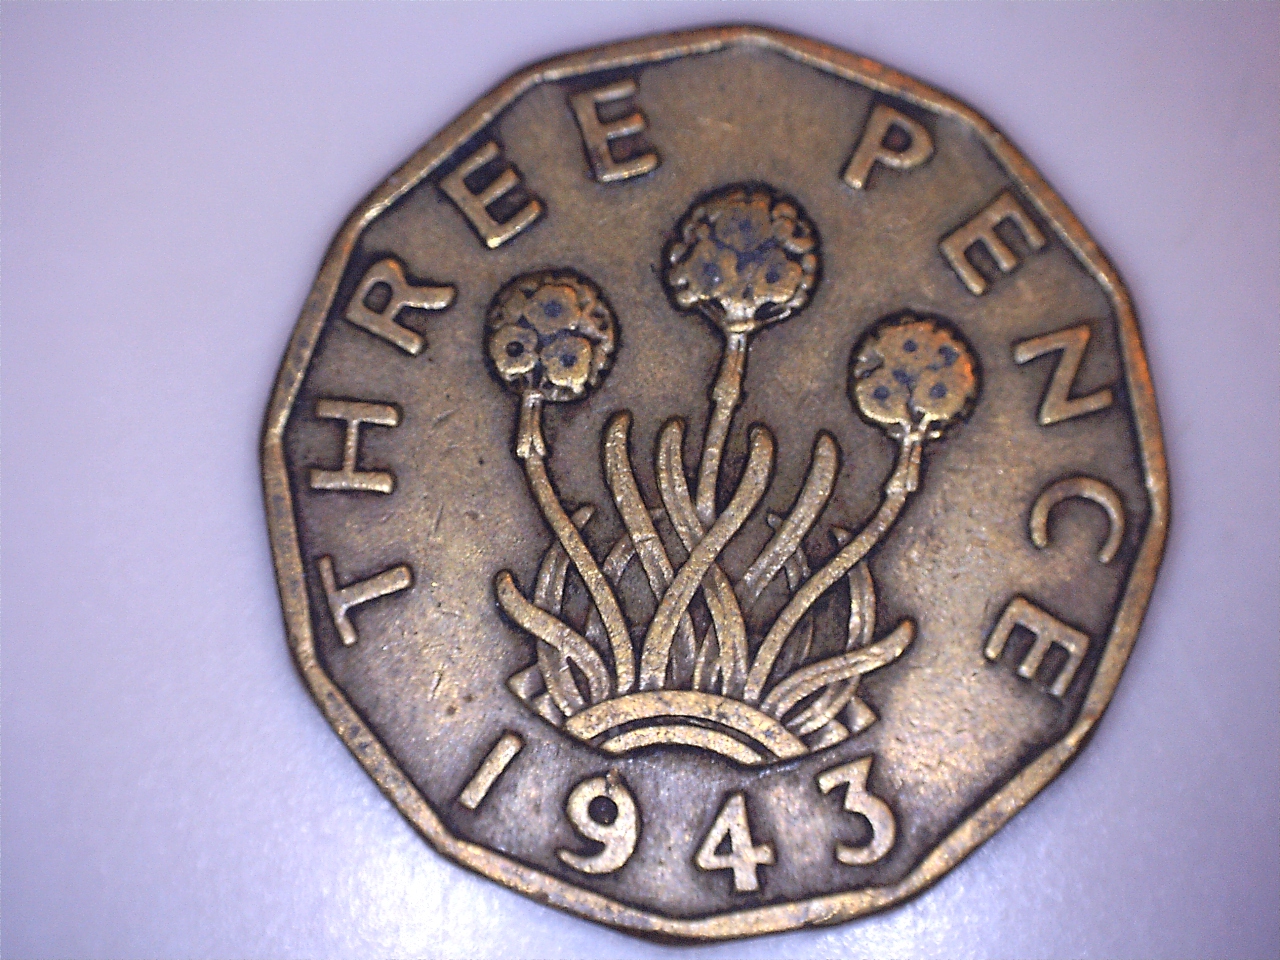 3 pence df 1943 a.jpg